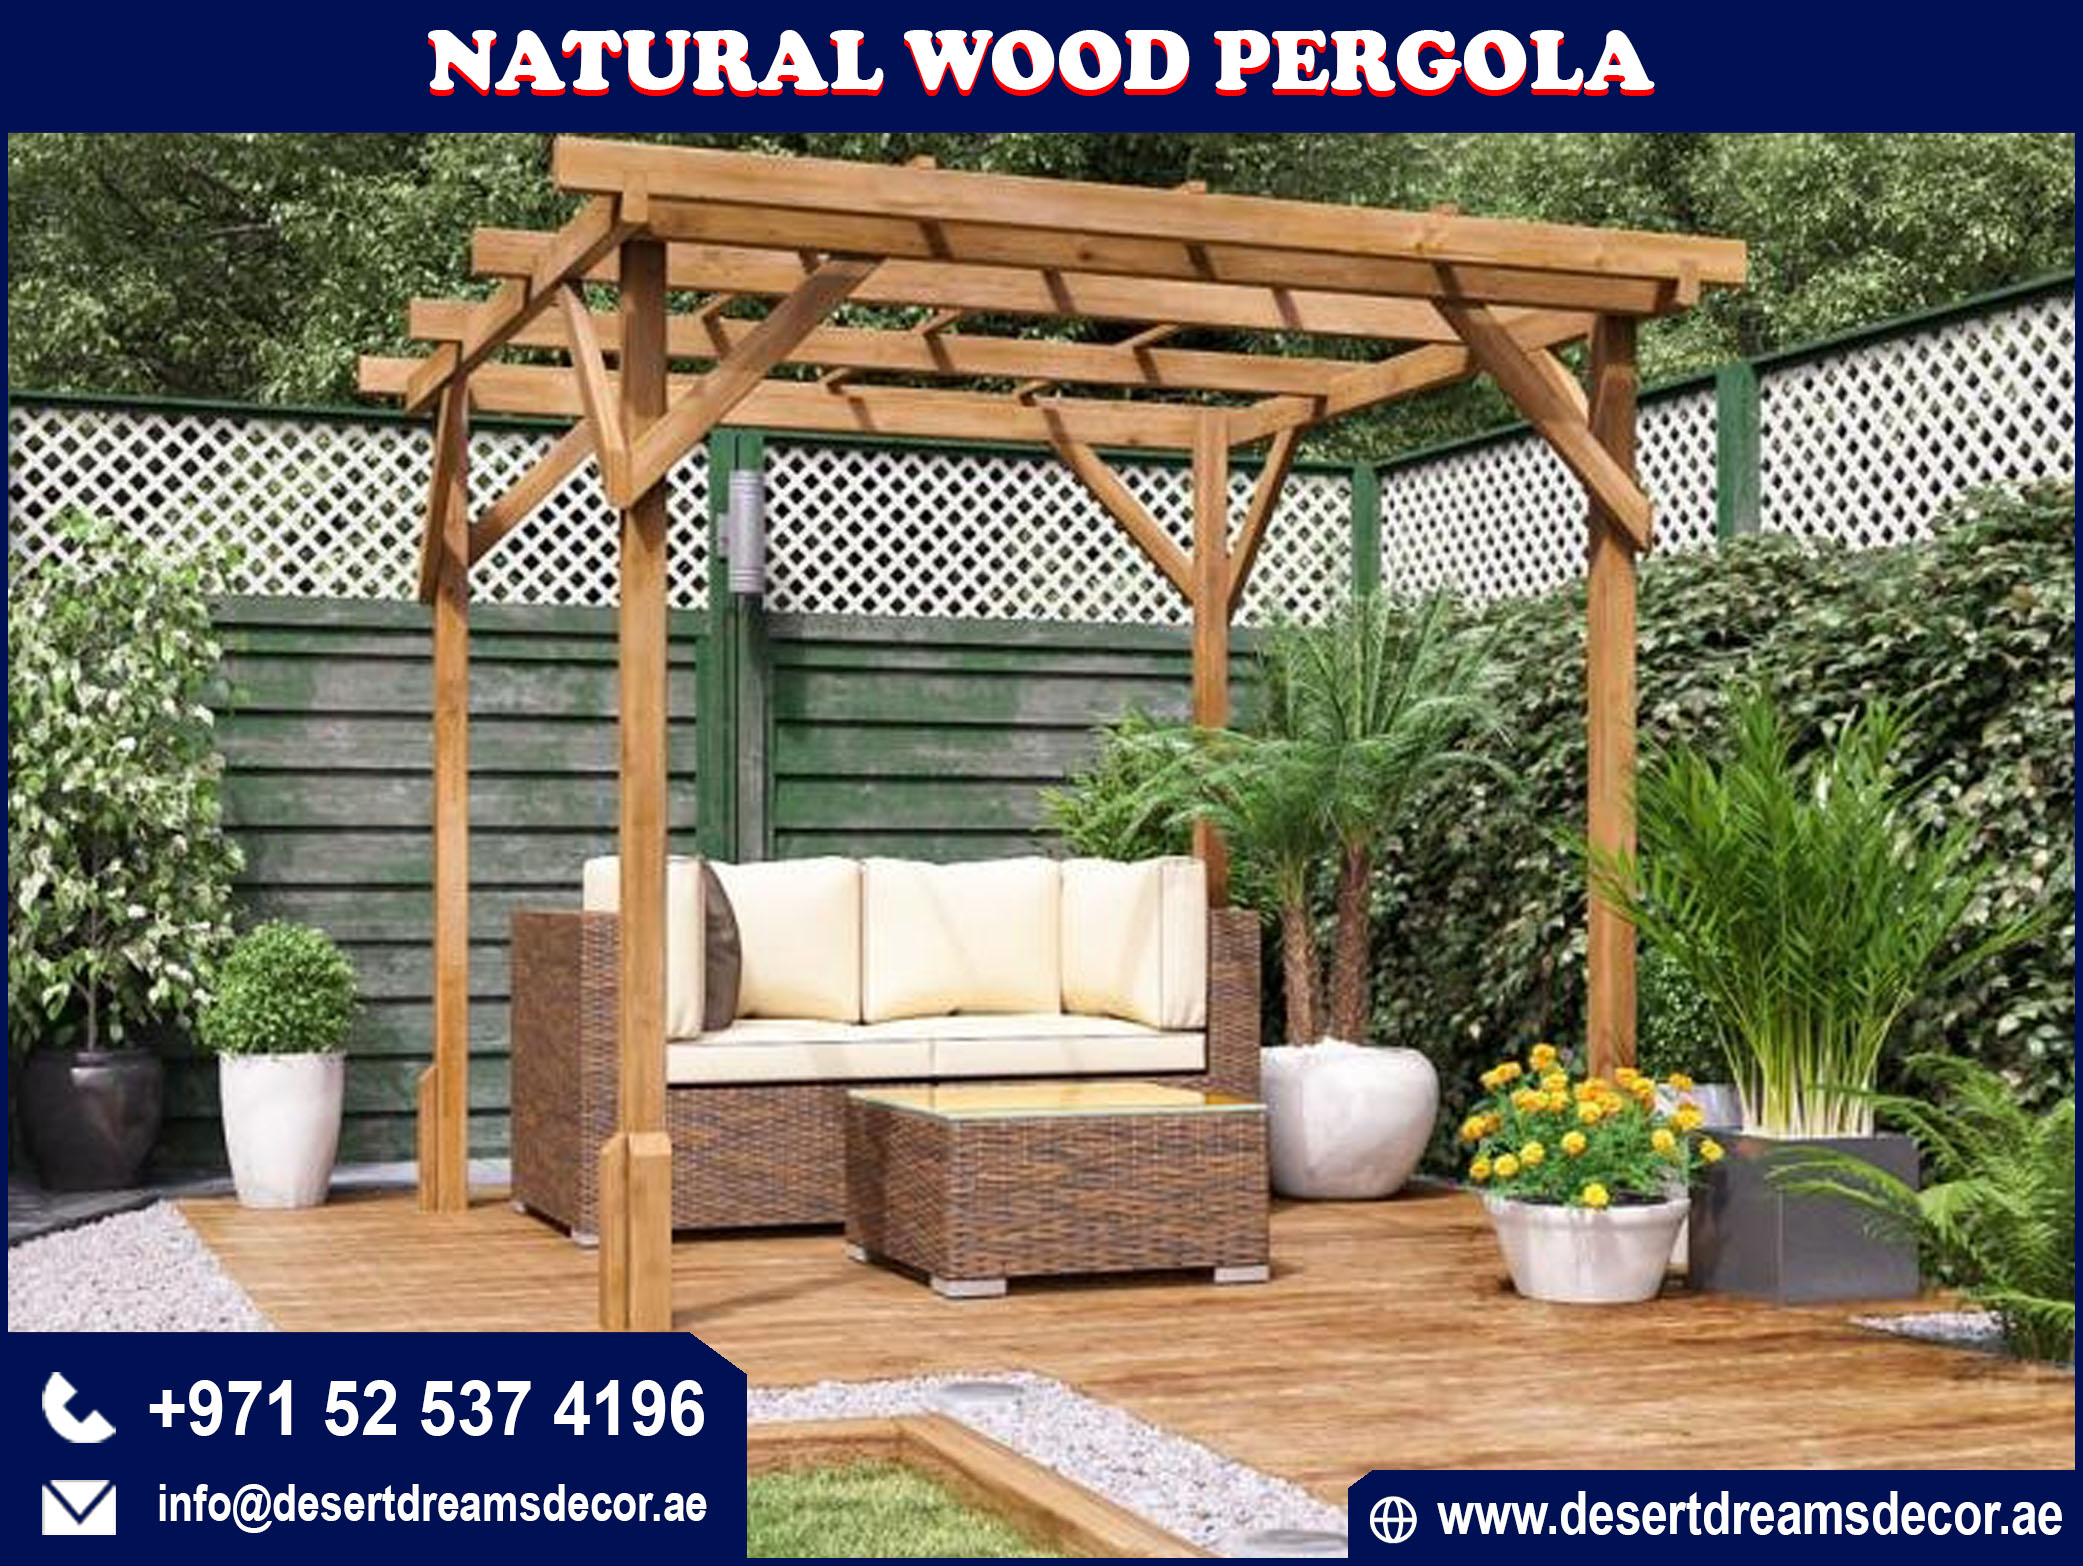 Natural Wood Pergola Uae | Wooden Pergola Abu Dhabi.